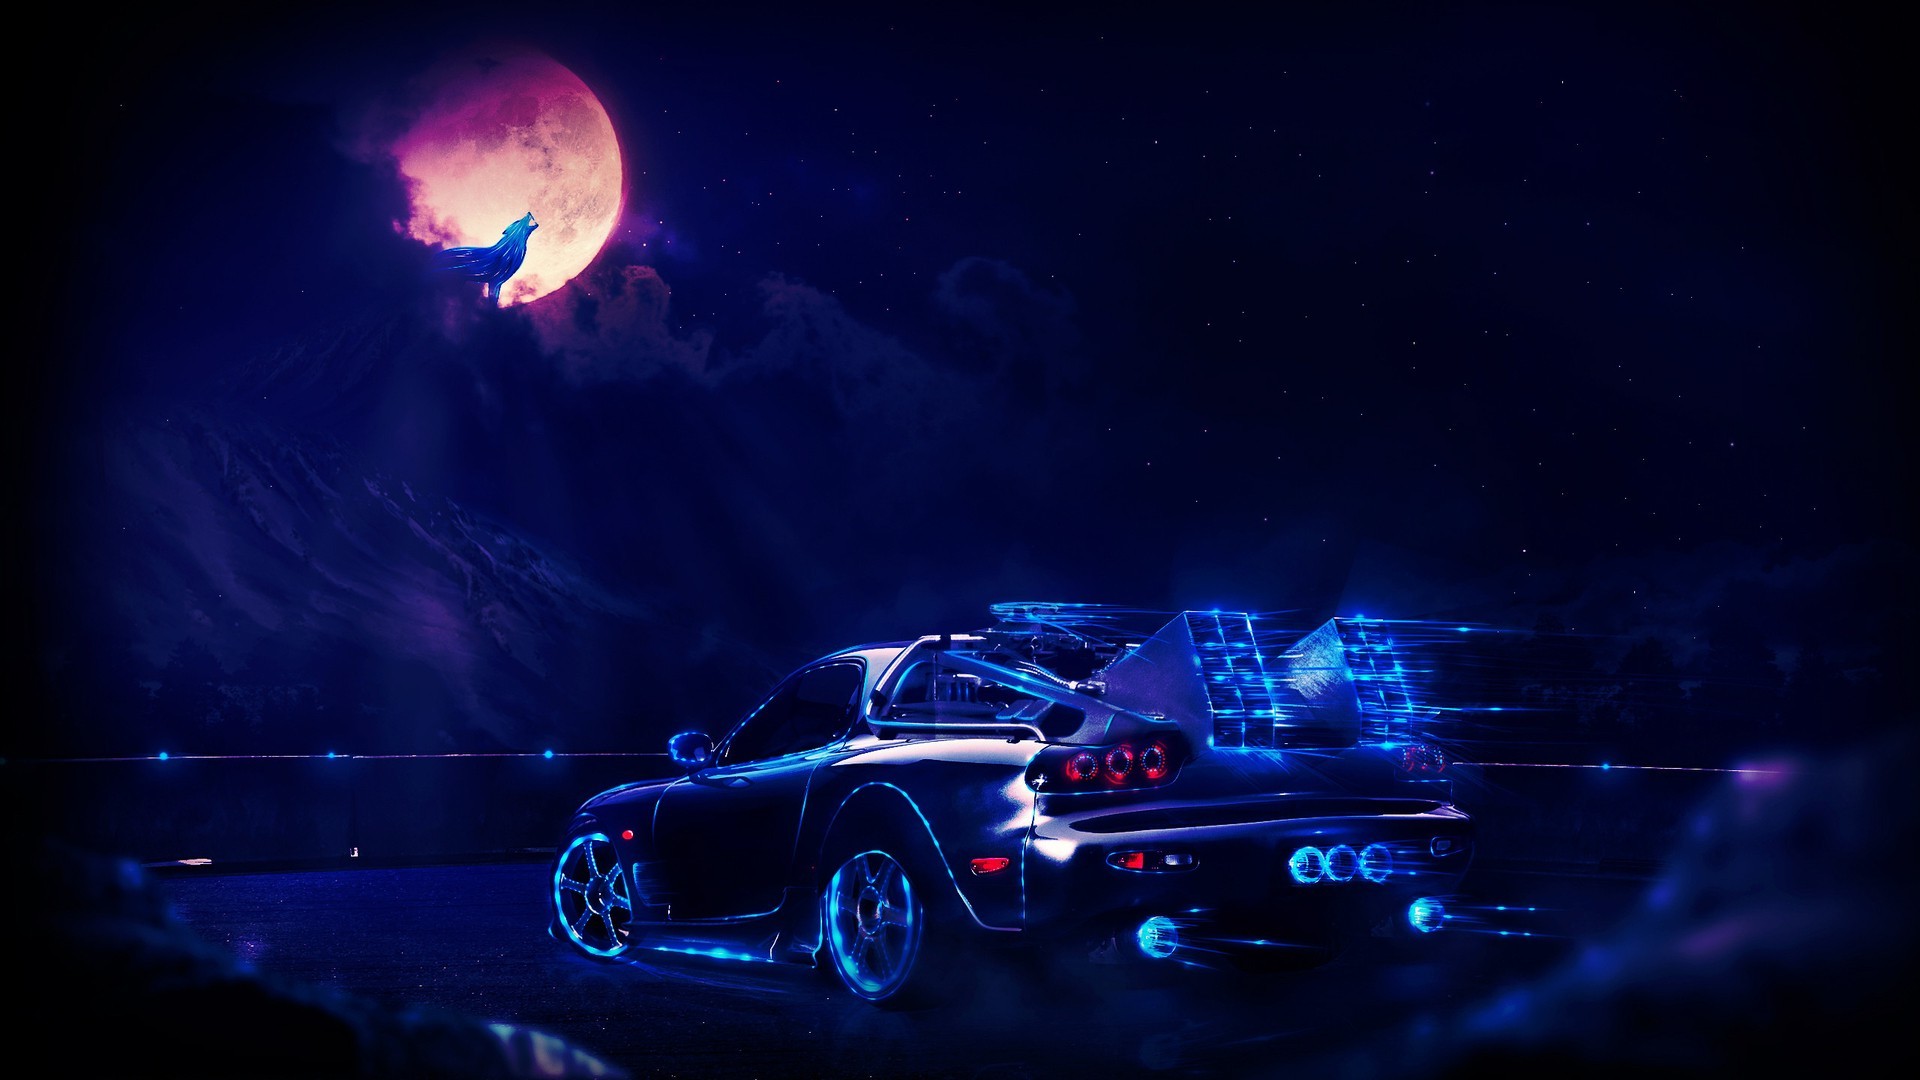 Car Neon Moon Wolf Back To The Future Digital Art Vehicle Blue Time Machine 1920x1080